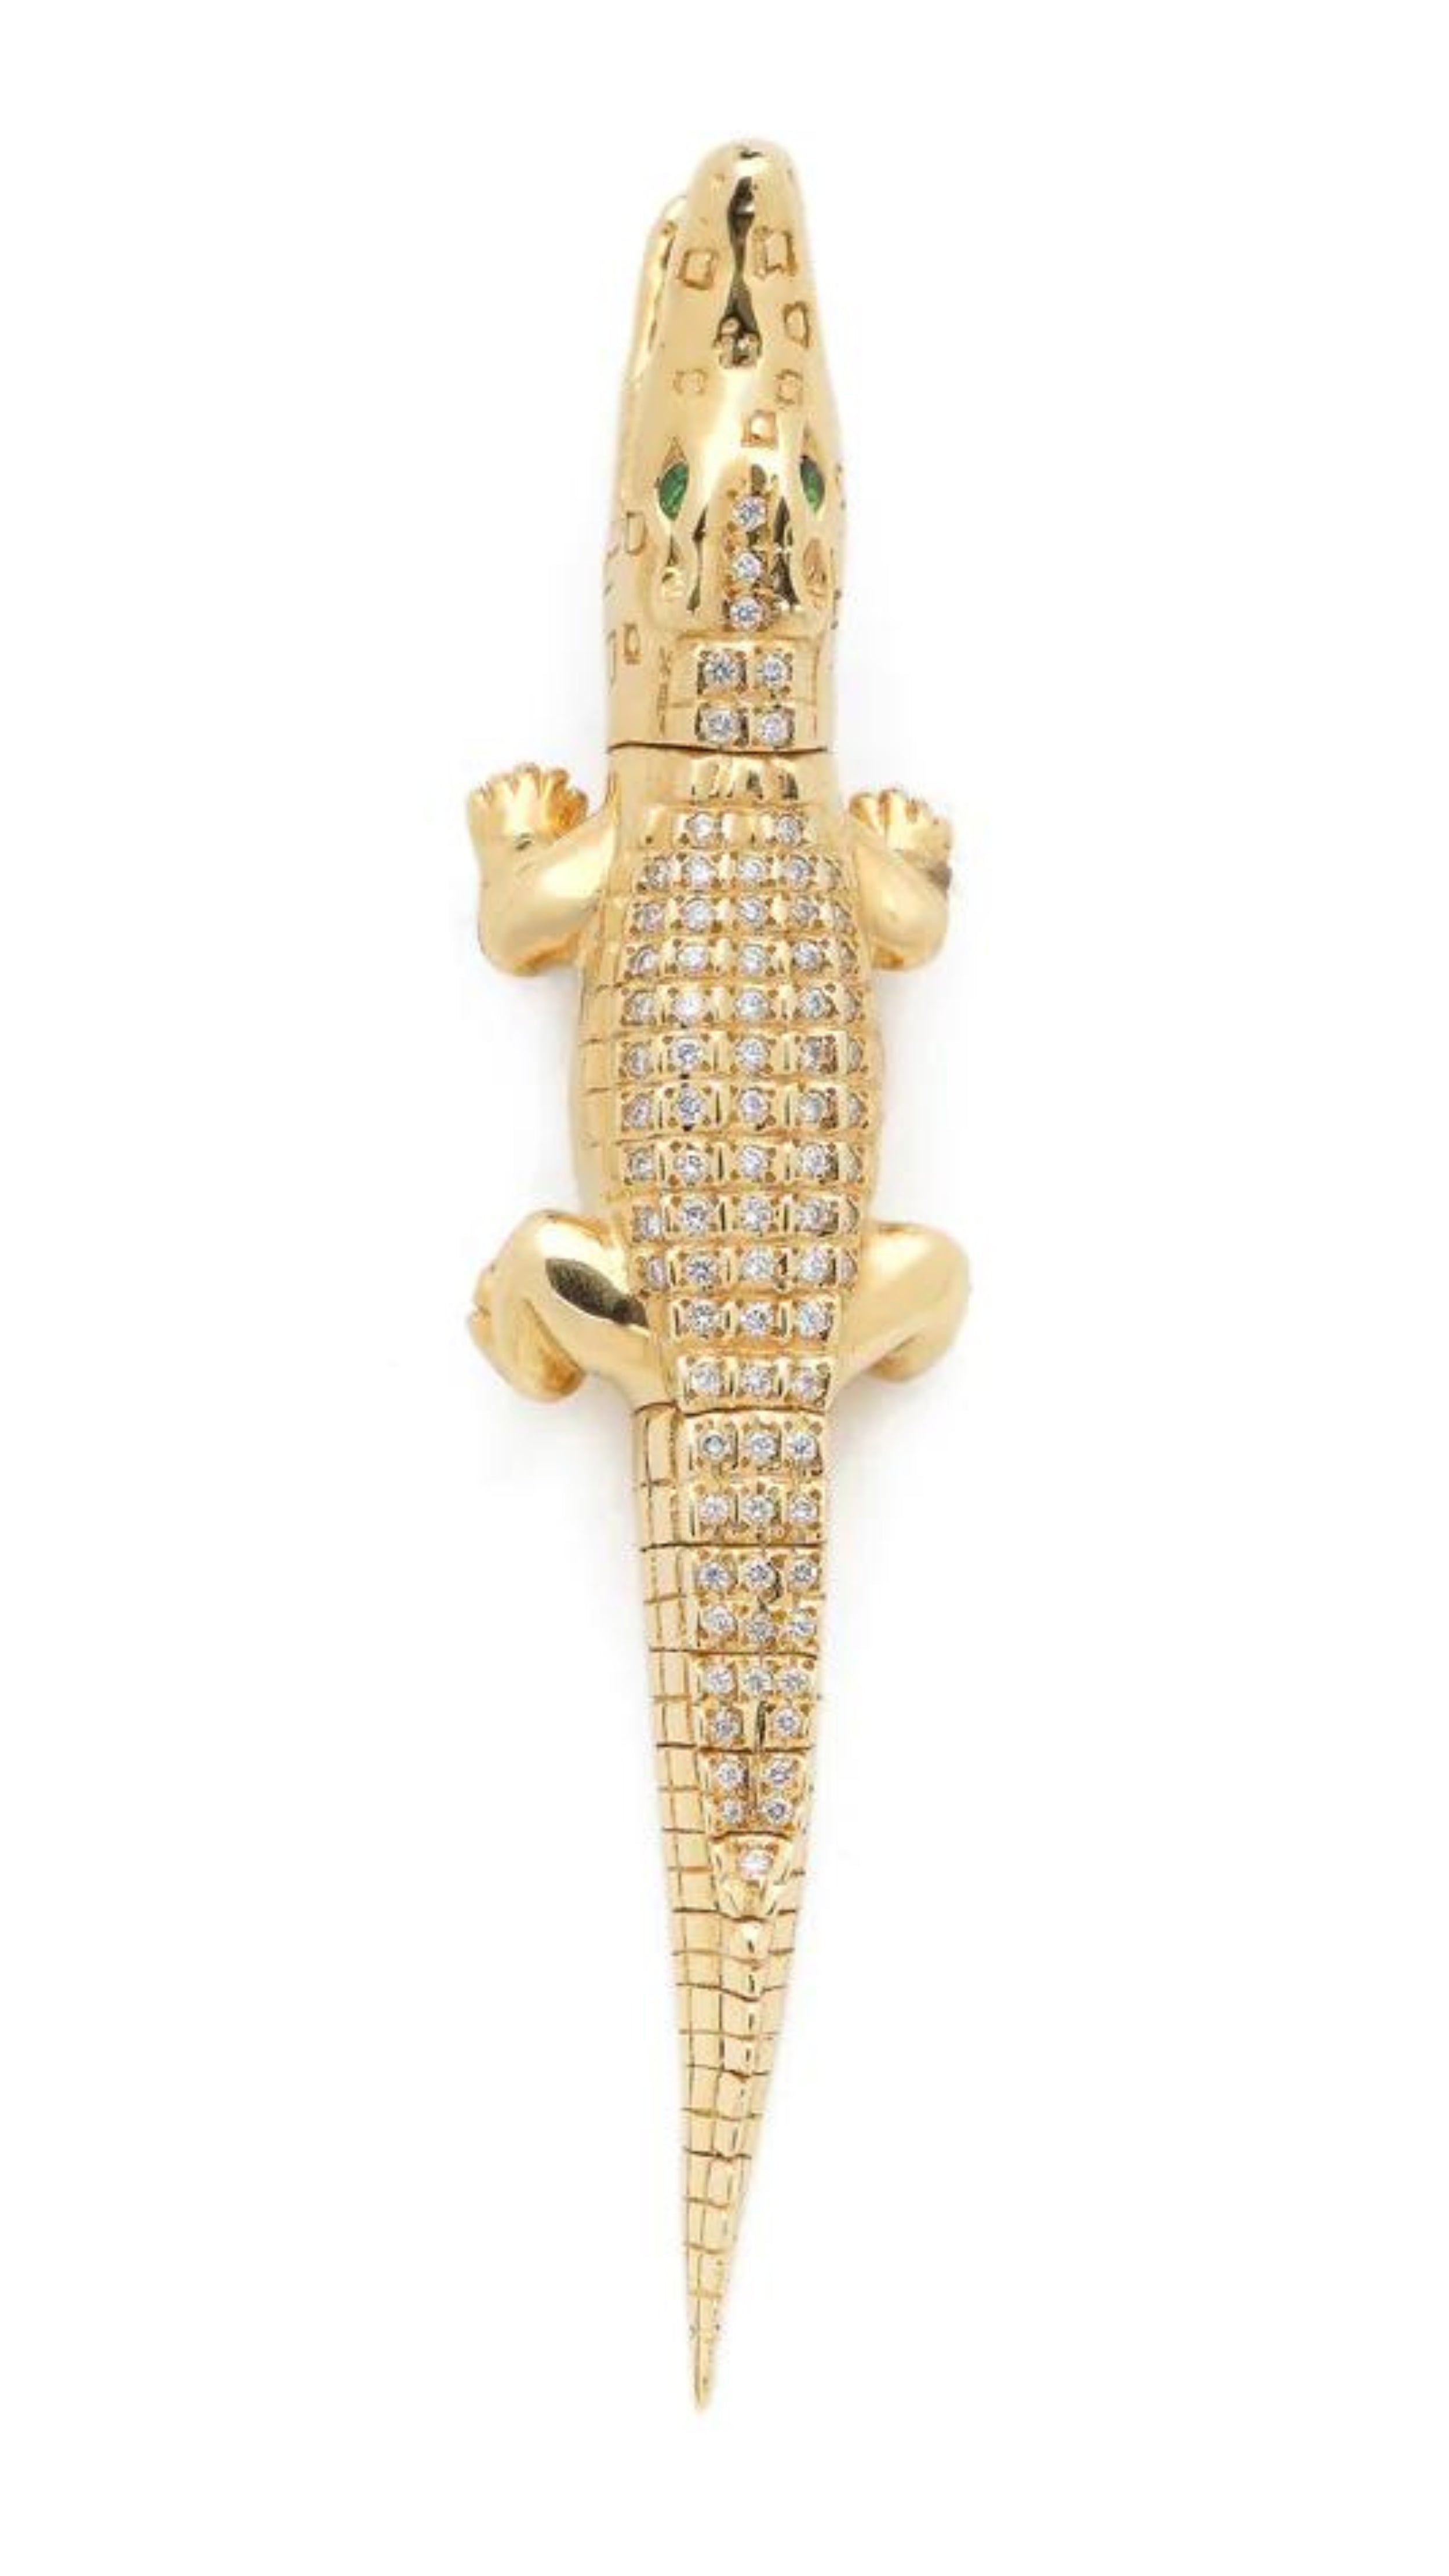 Bibi van der Velden, Alligator Bite Diamond Earring. Single alligator earring crafted in 18K gold with white diamond pace body. Shown from the top.